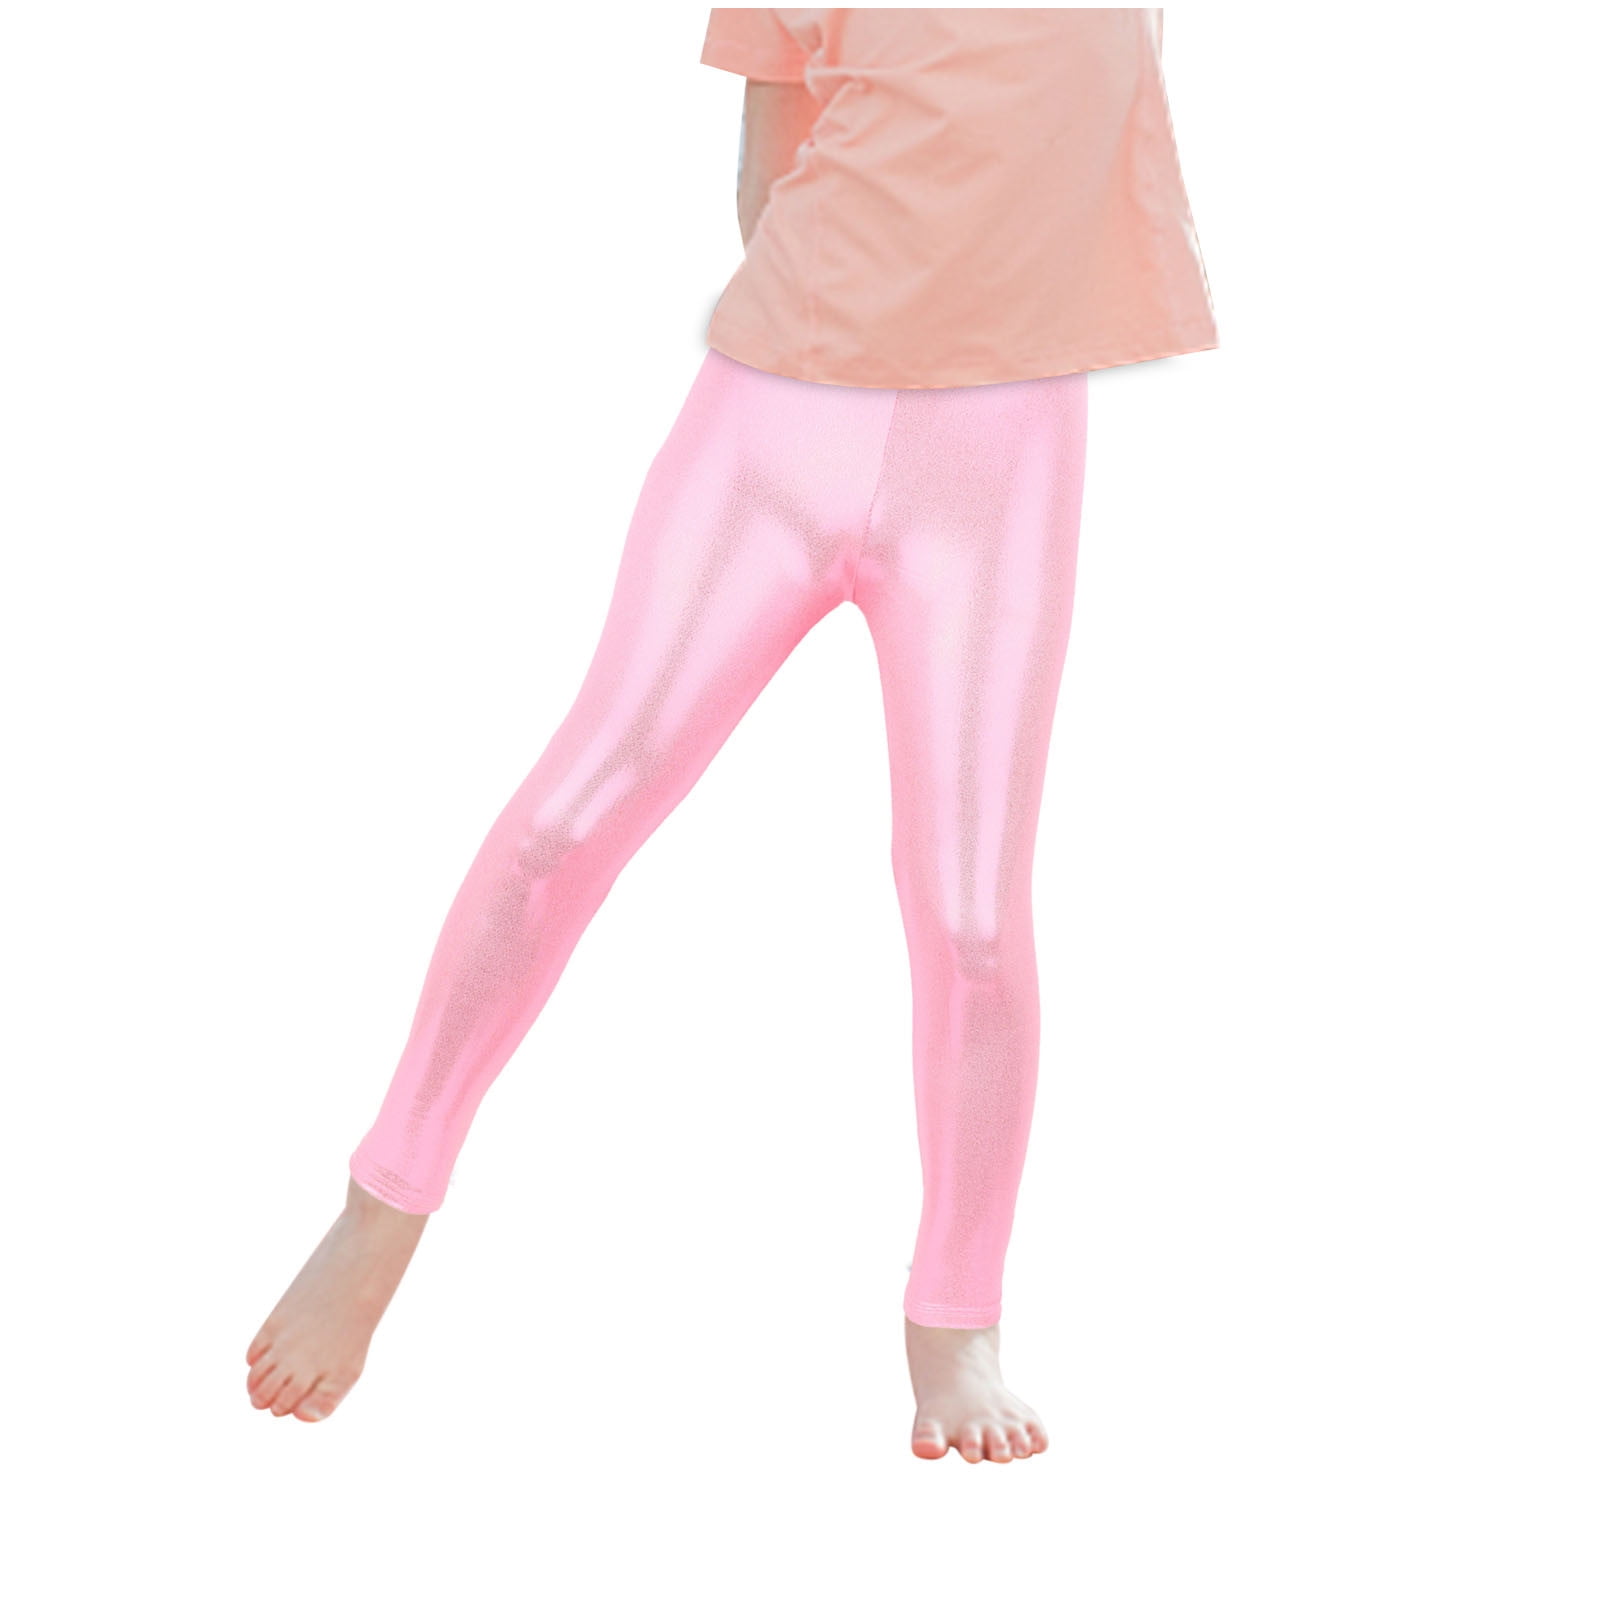 ZKCCNUK Plus Size Crz Yoga Shorts Kids Girls Fitness Dance Pants Solid  Color Leggings Yoga Sports Long Pants Casual Pants for Women on Clearance 